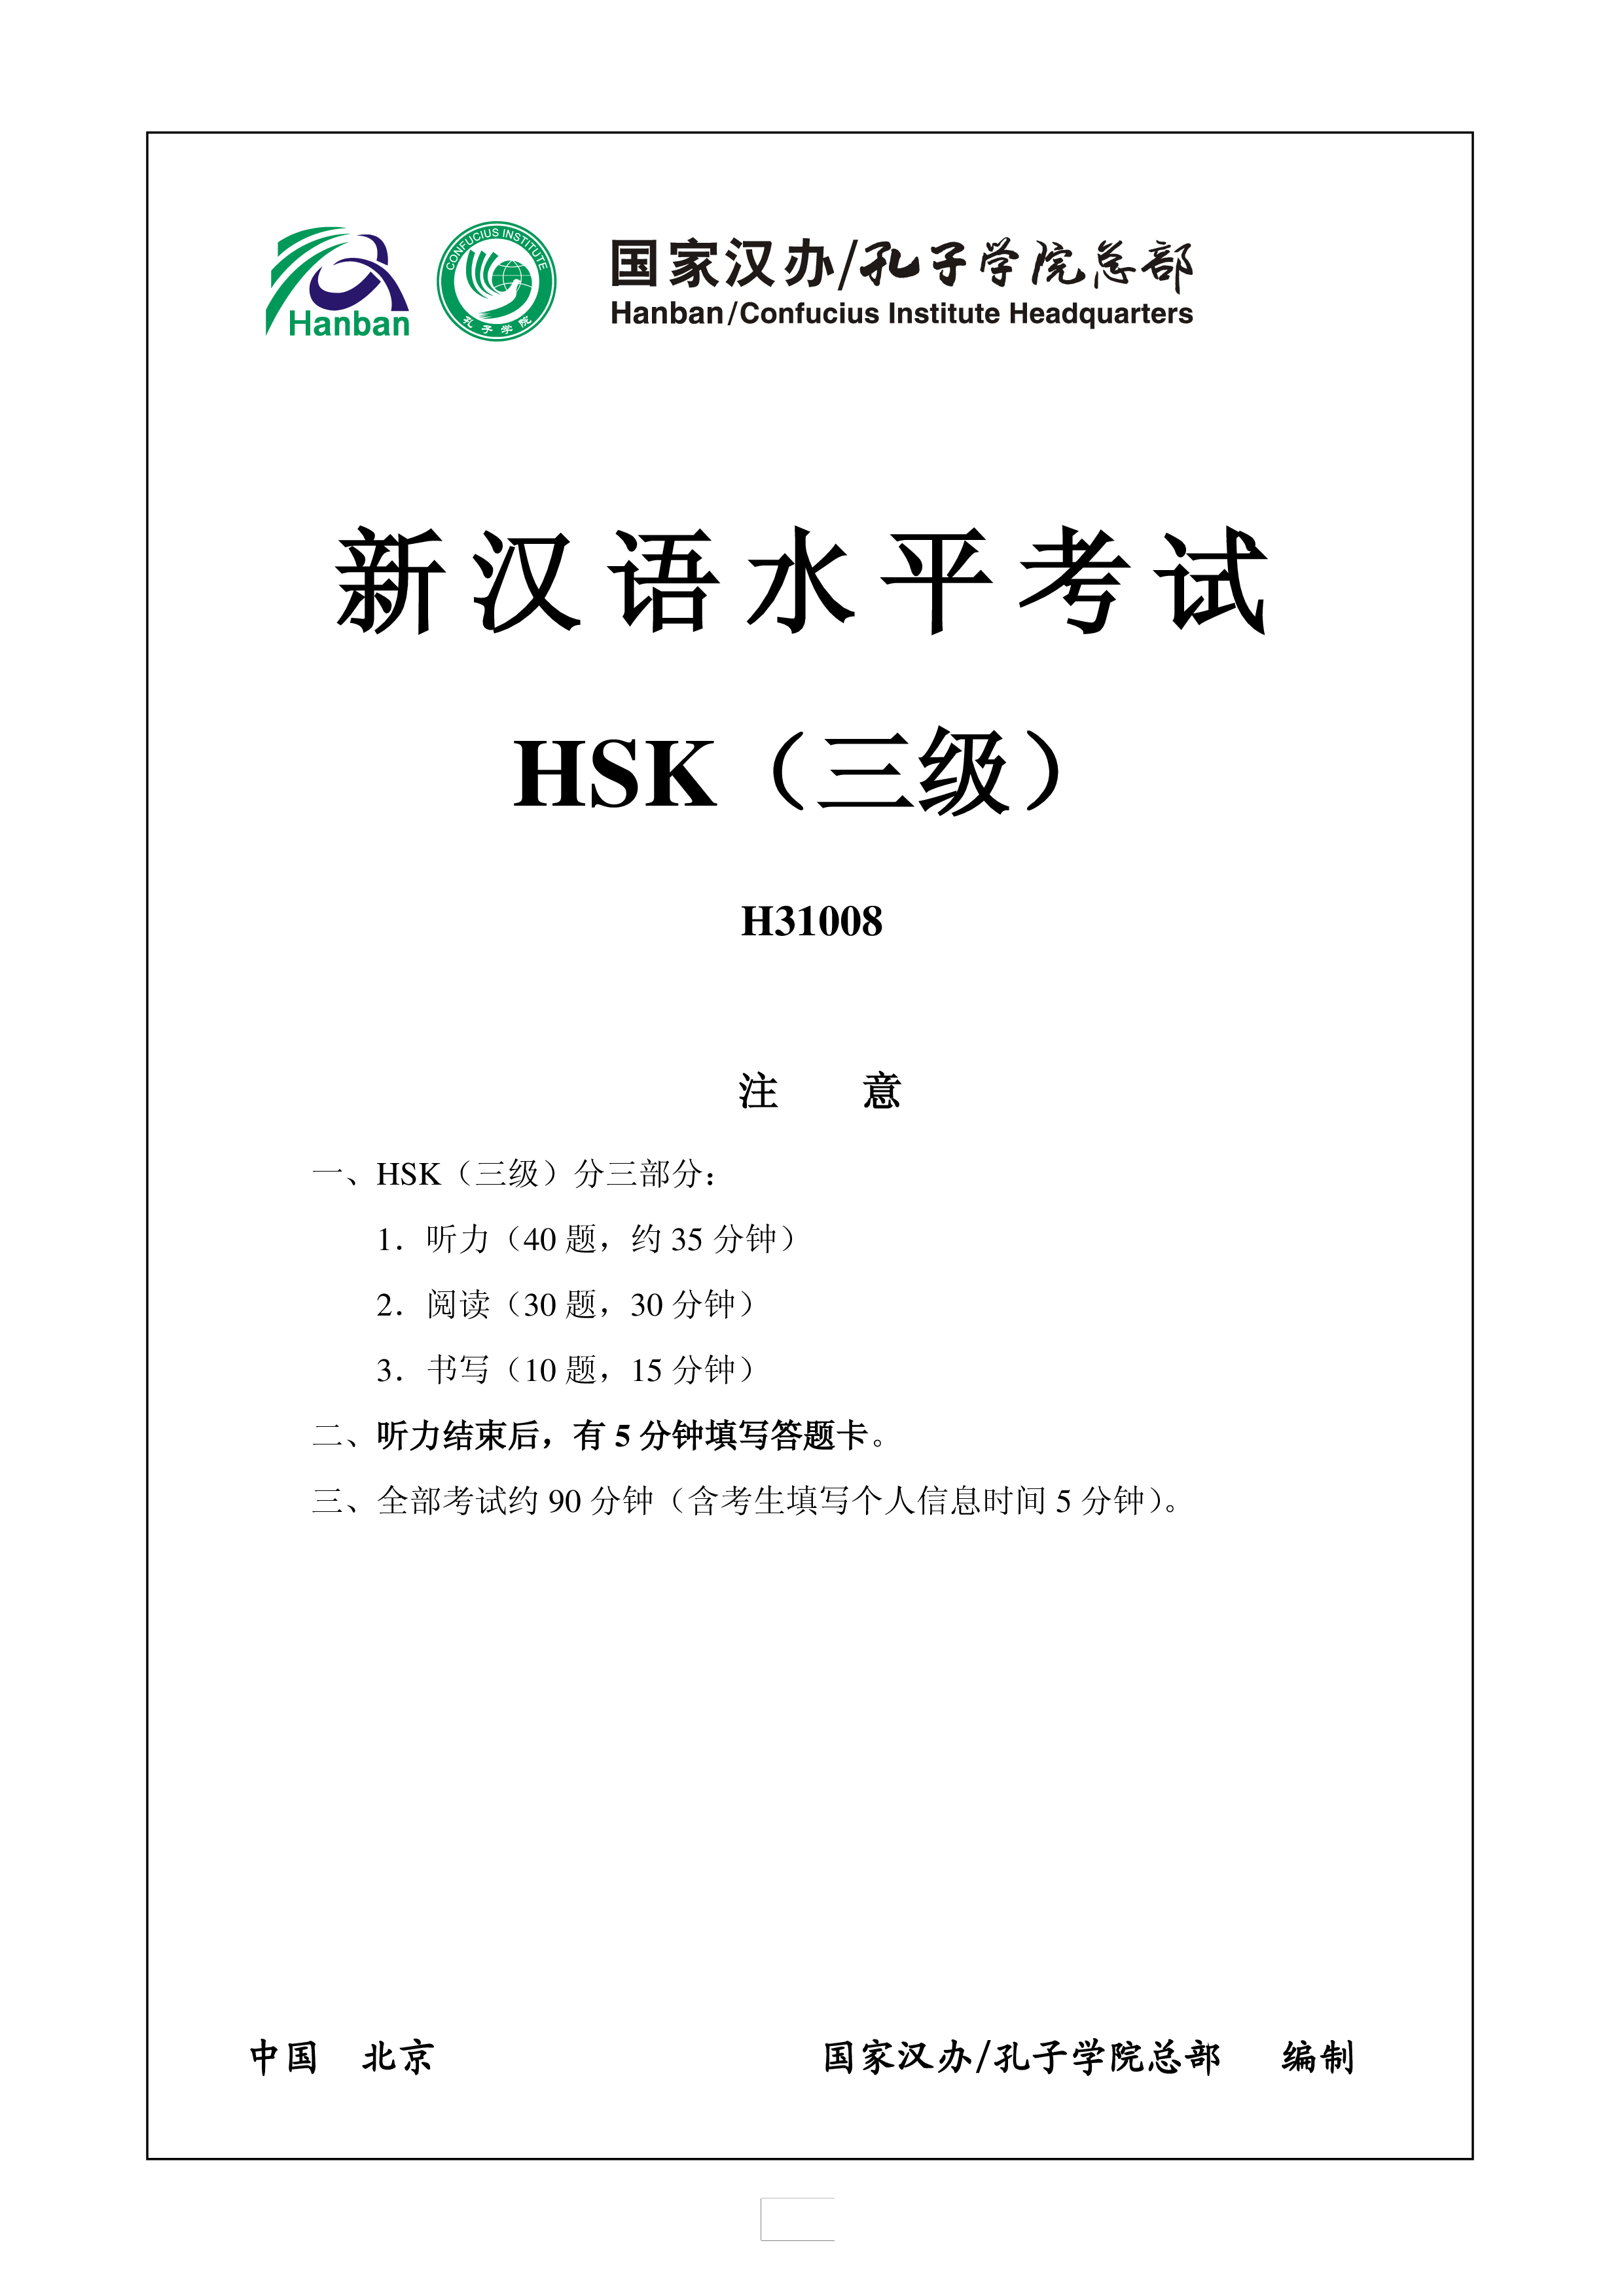 HSK 3 H31008 Exam Paper main image